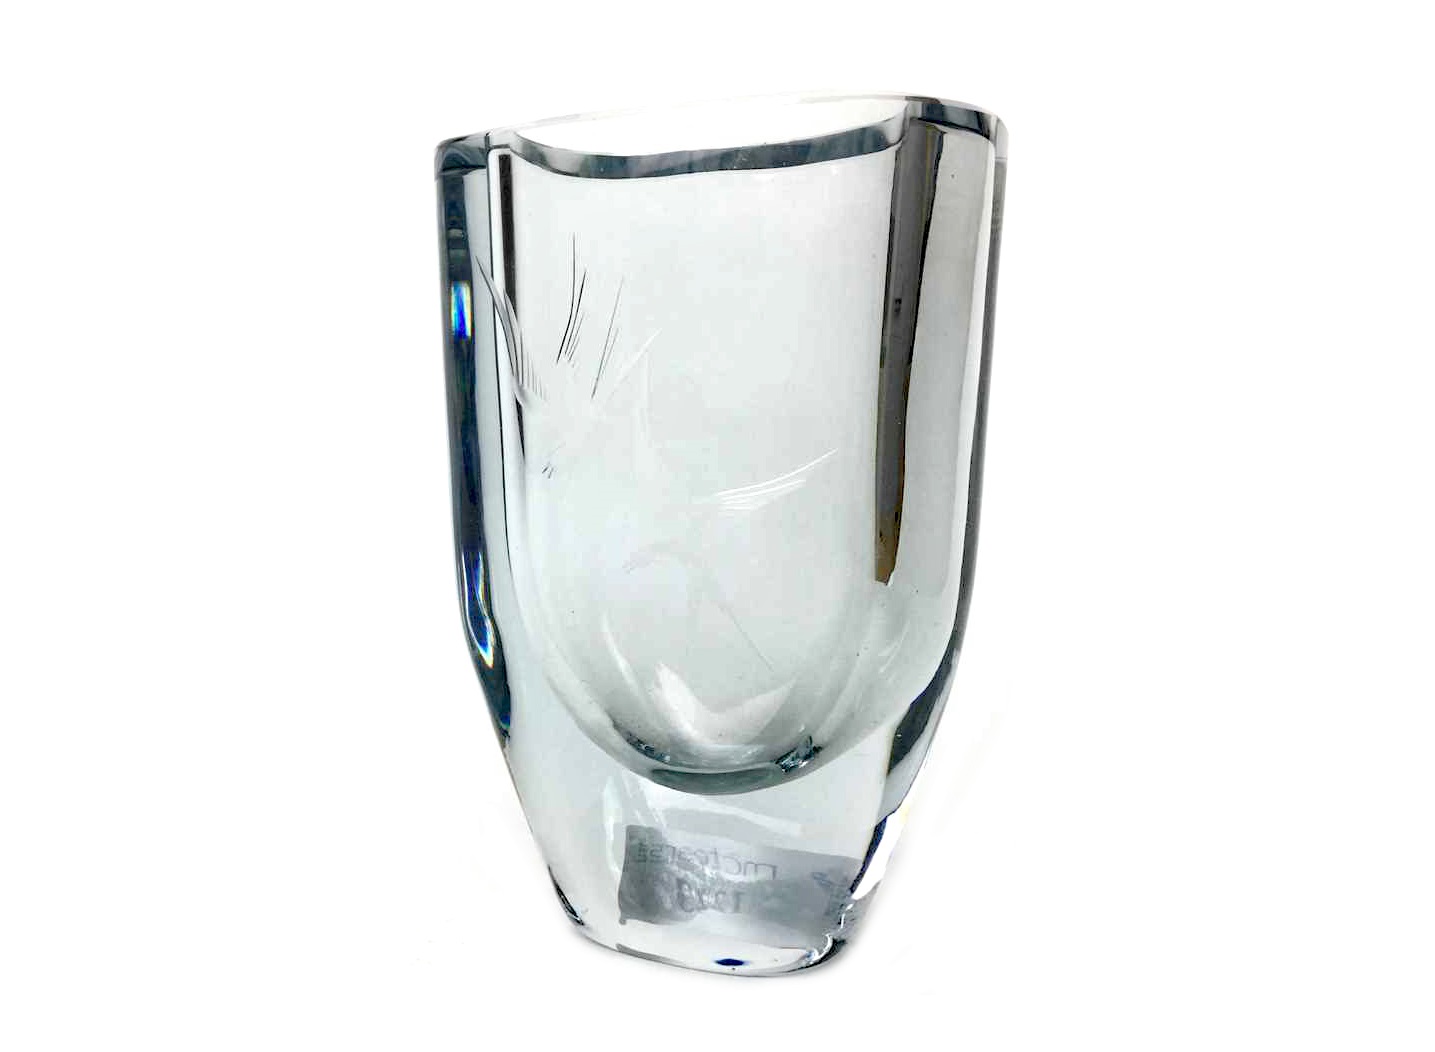 A STROMBERG GLASS VASE